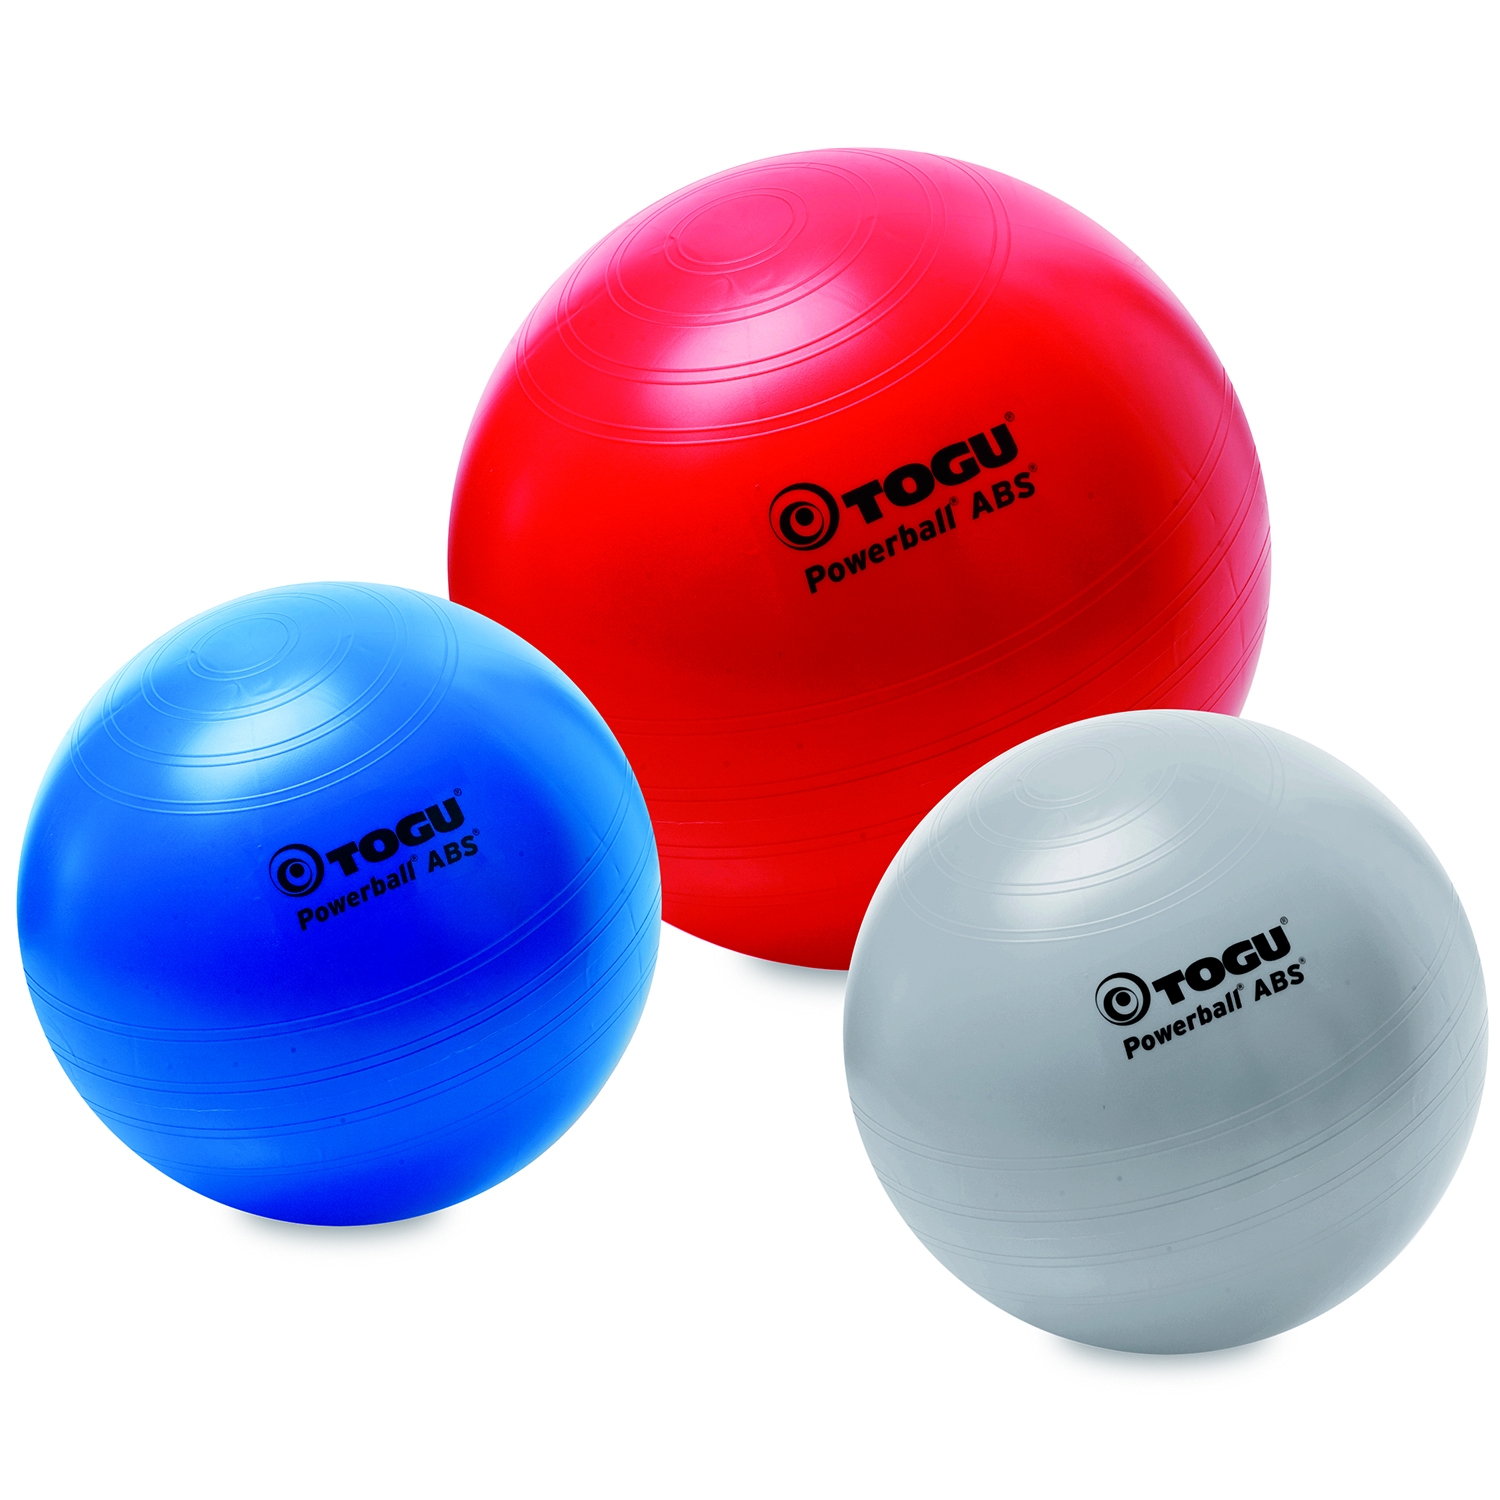 Togu Powerball ABS - ballon siège - 75 cm - argent